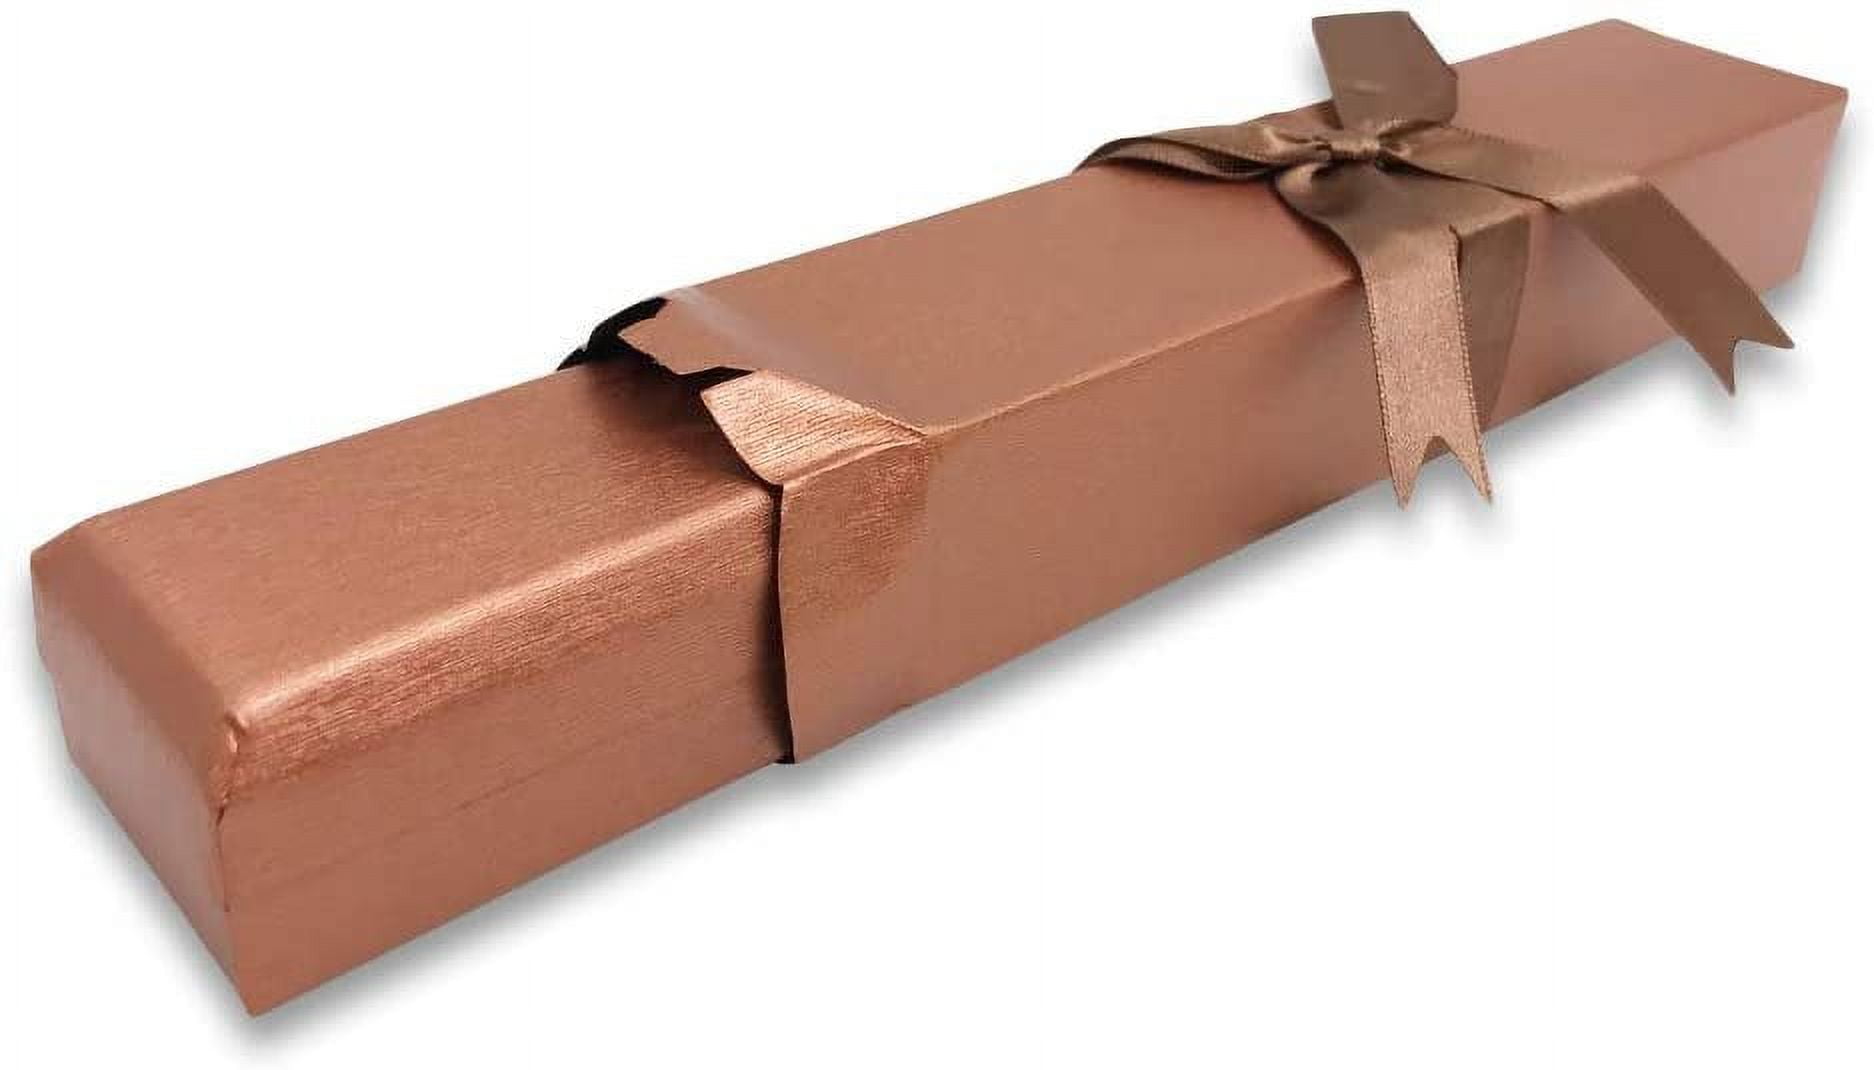 Wooden Pine Gift Box - Holds 2 Copper Mule Mugs, Copper Mug Co.